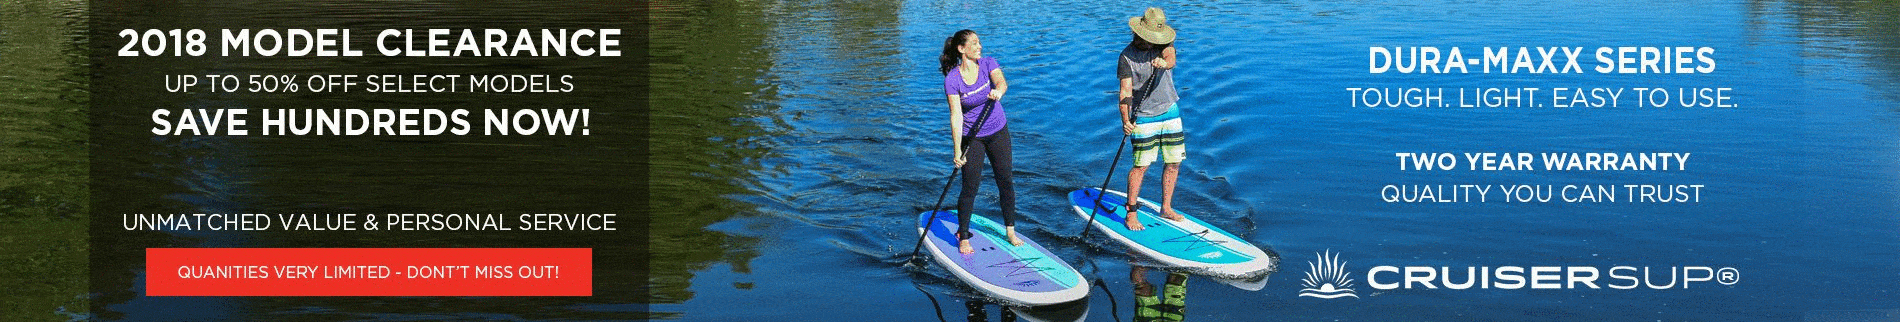 Dura-Maxx Paddle Boards